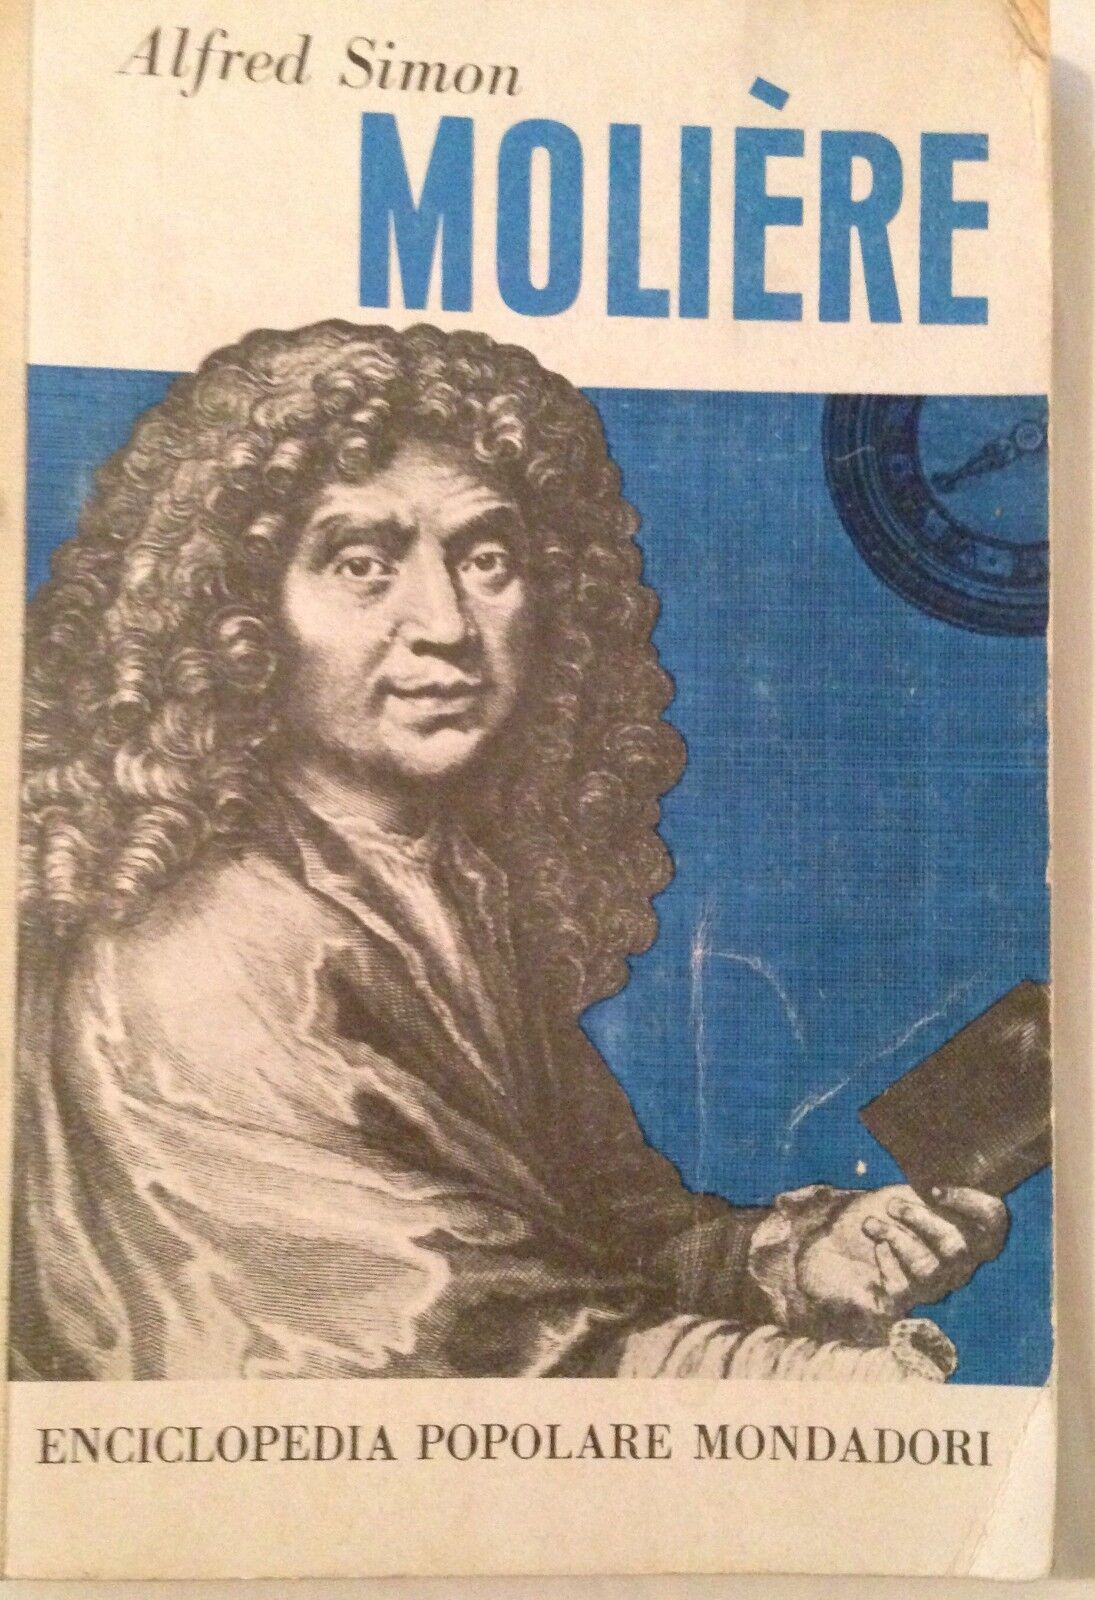 Moliere - Alfred Simon  - Mondadori - 1960 - M